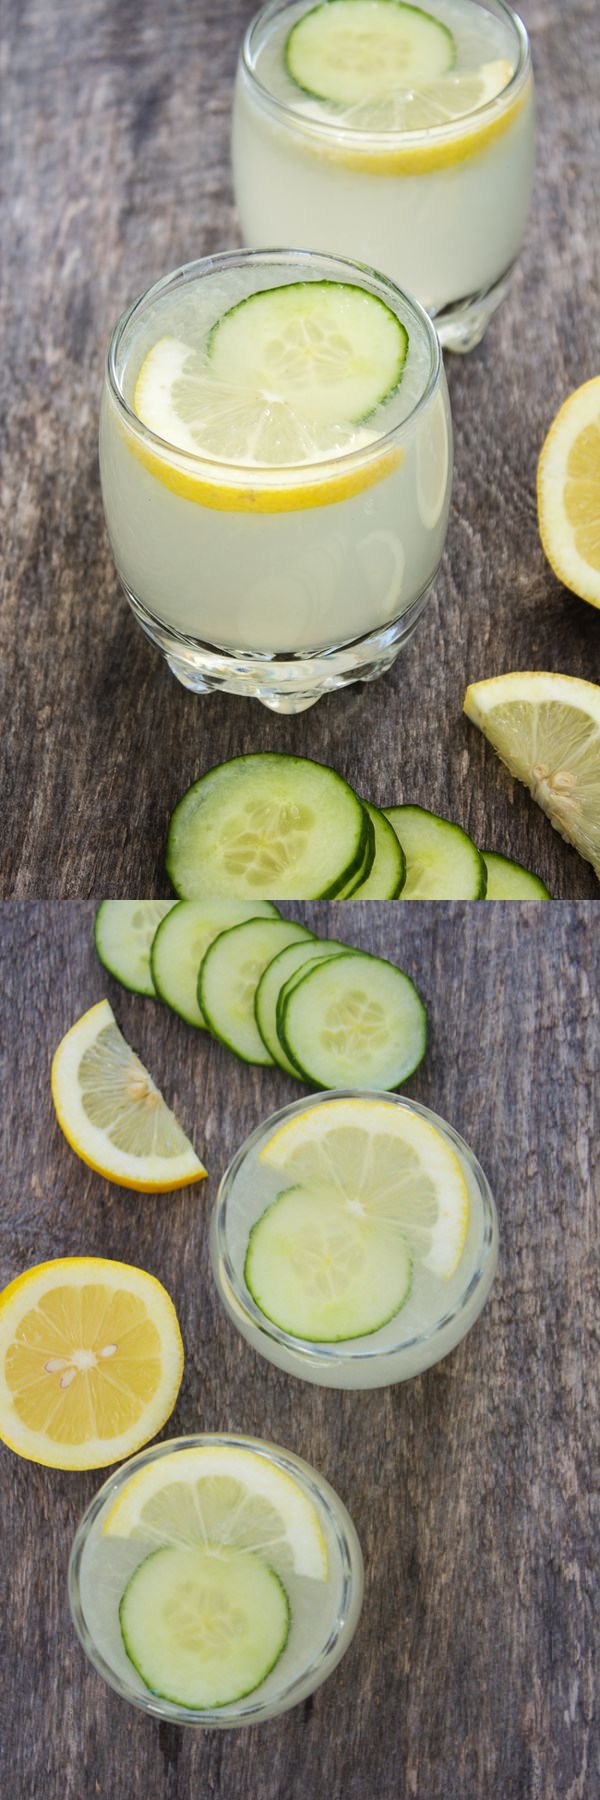 The Best Cucumber Lemonade